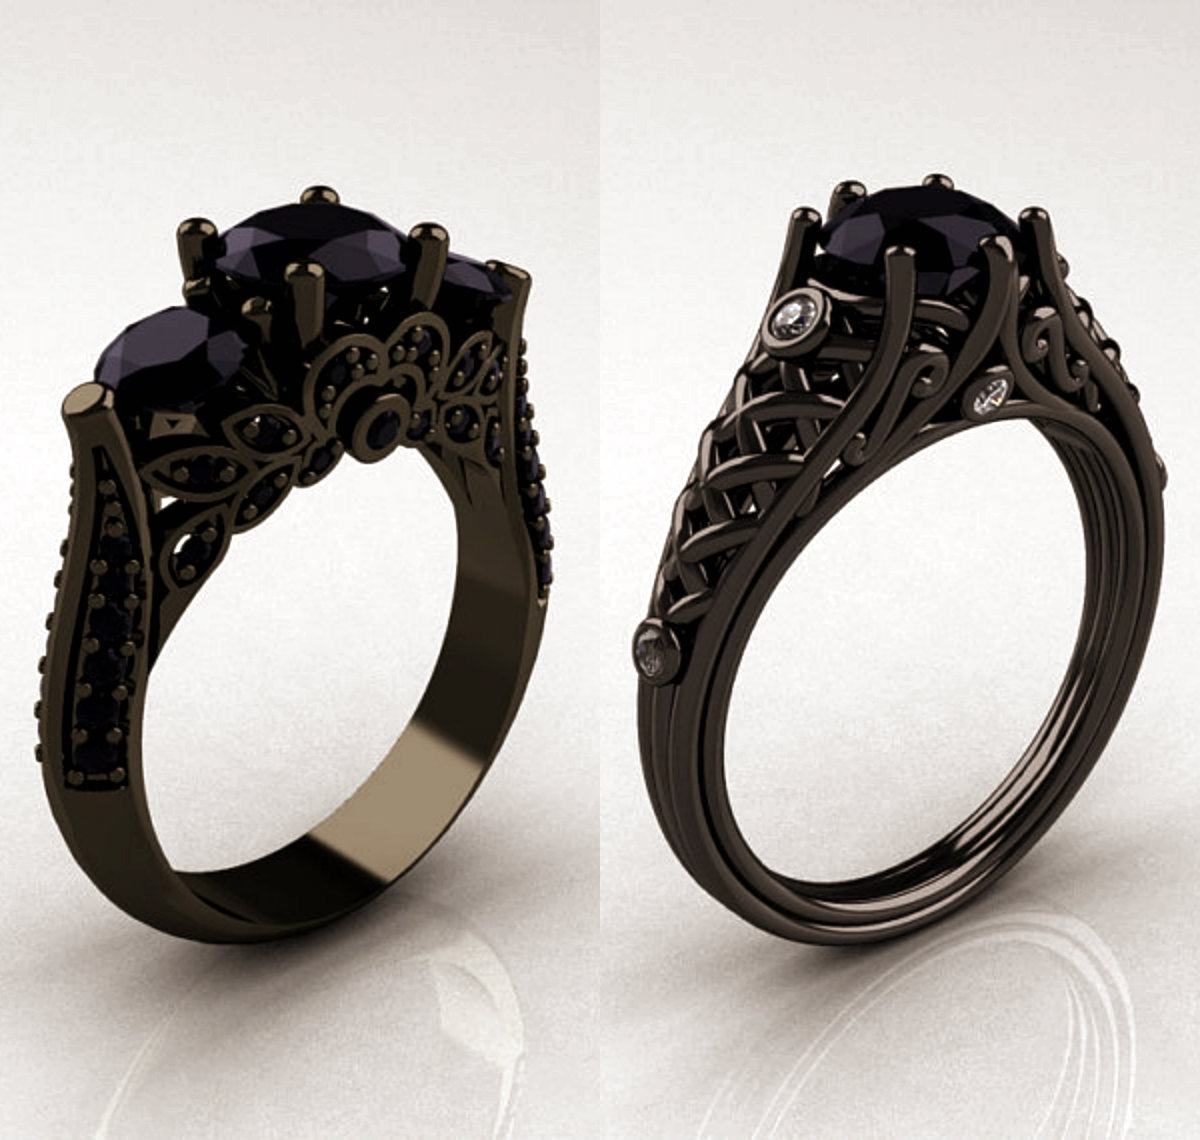 ifiweretomarry:  I want a black diamond, black gold engagement ring.